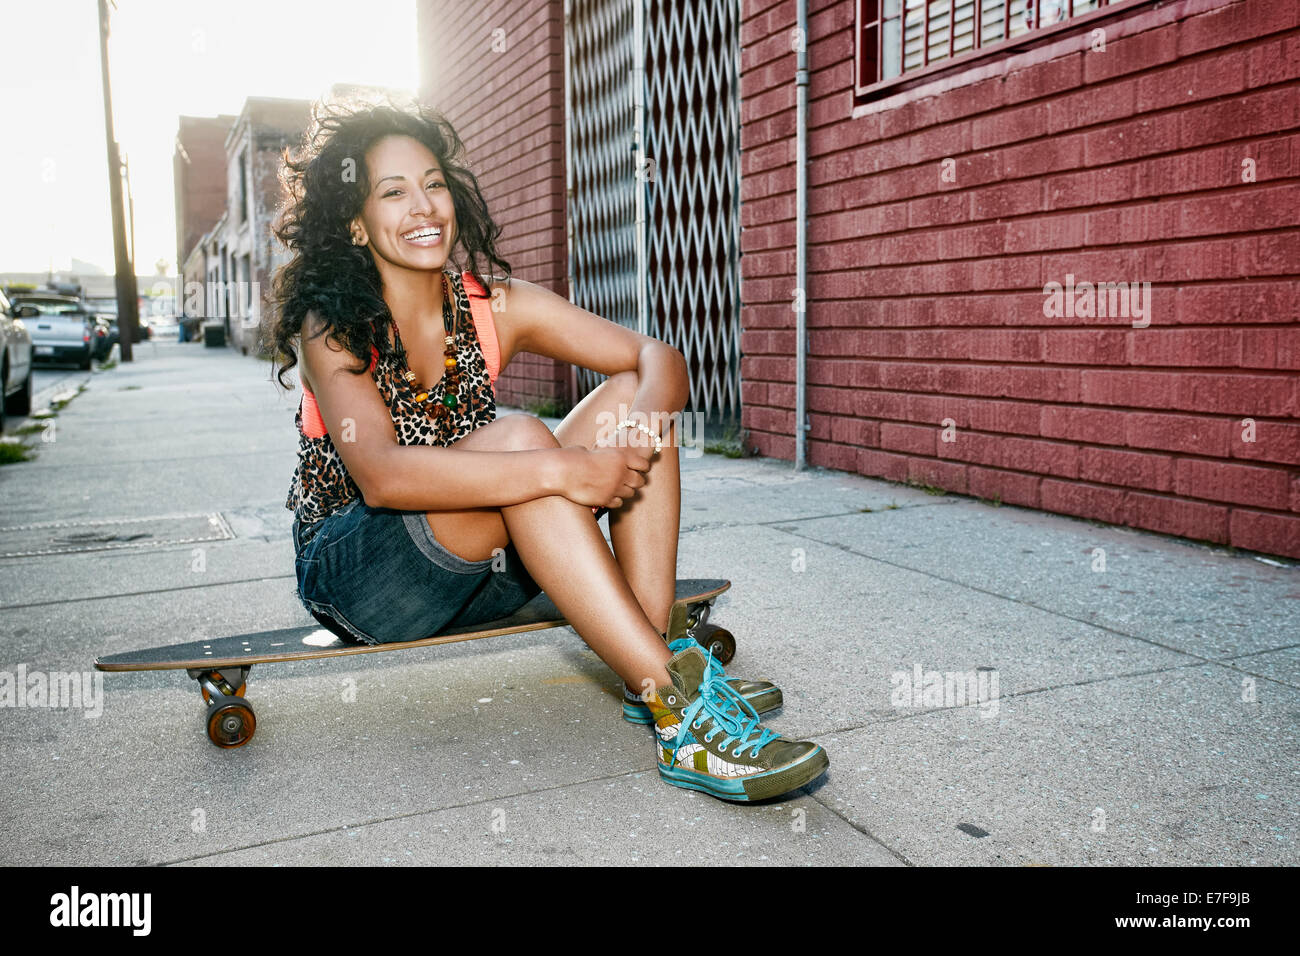 Hispanic woman sitting on skateboard on city street Stock Photo